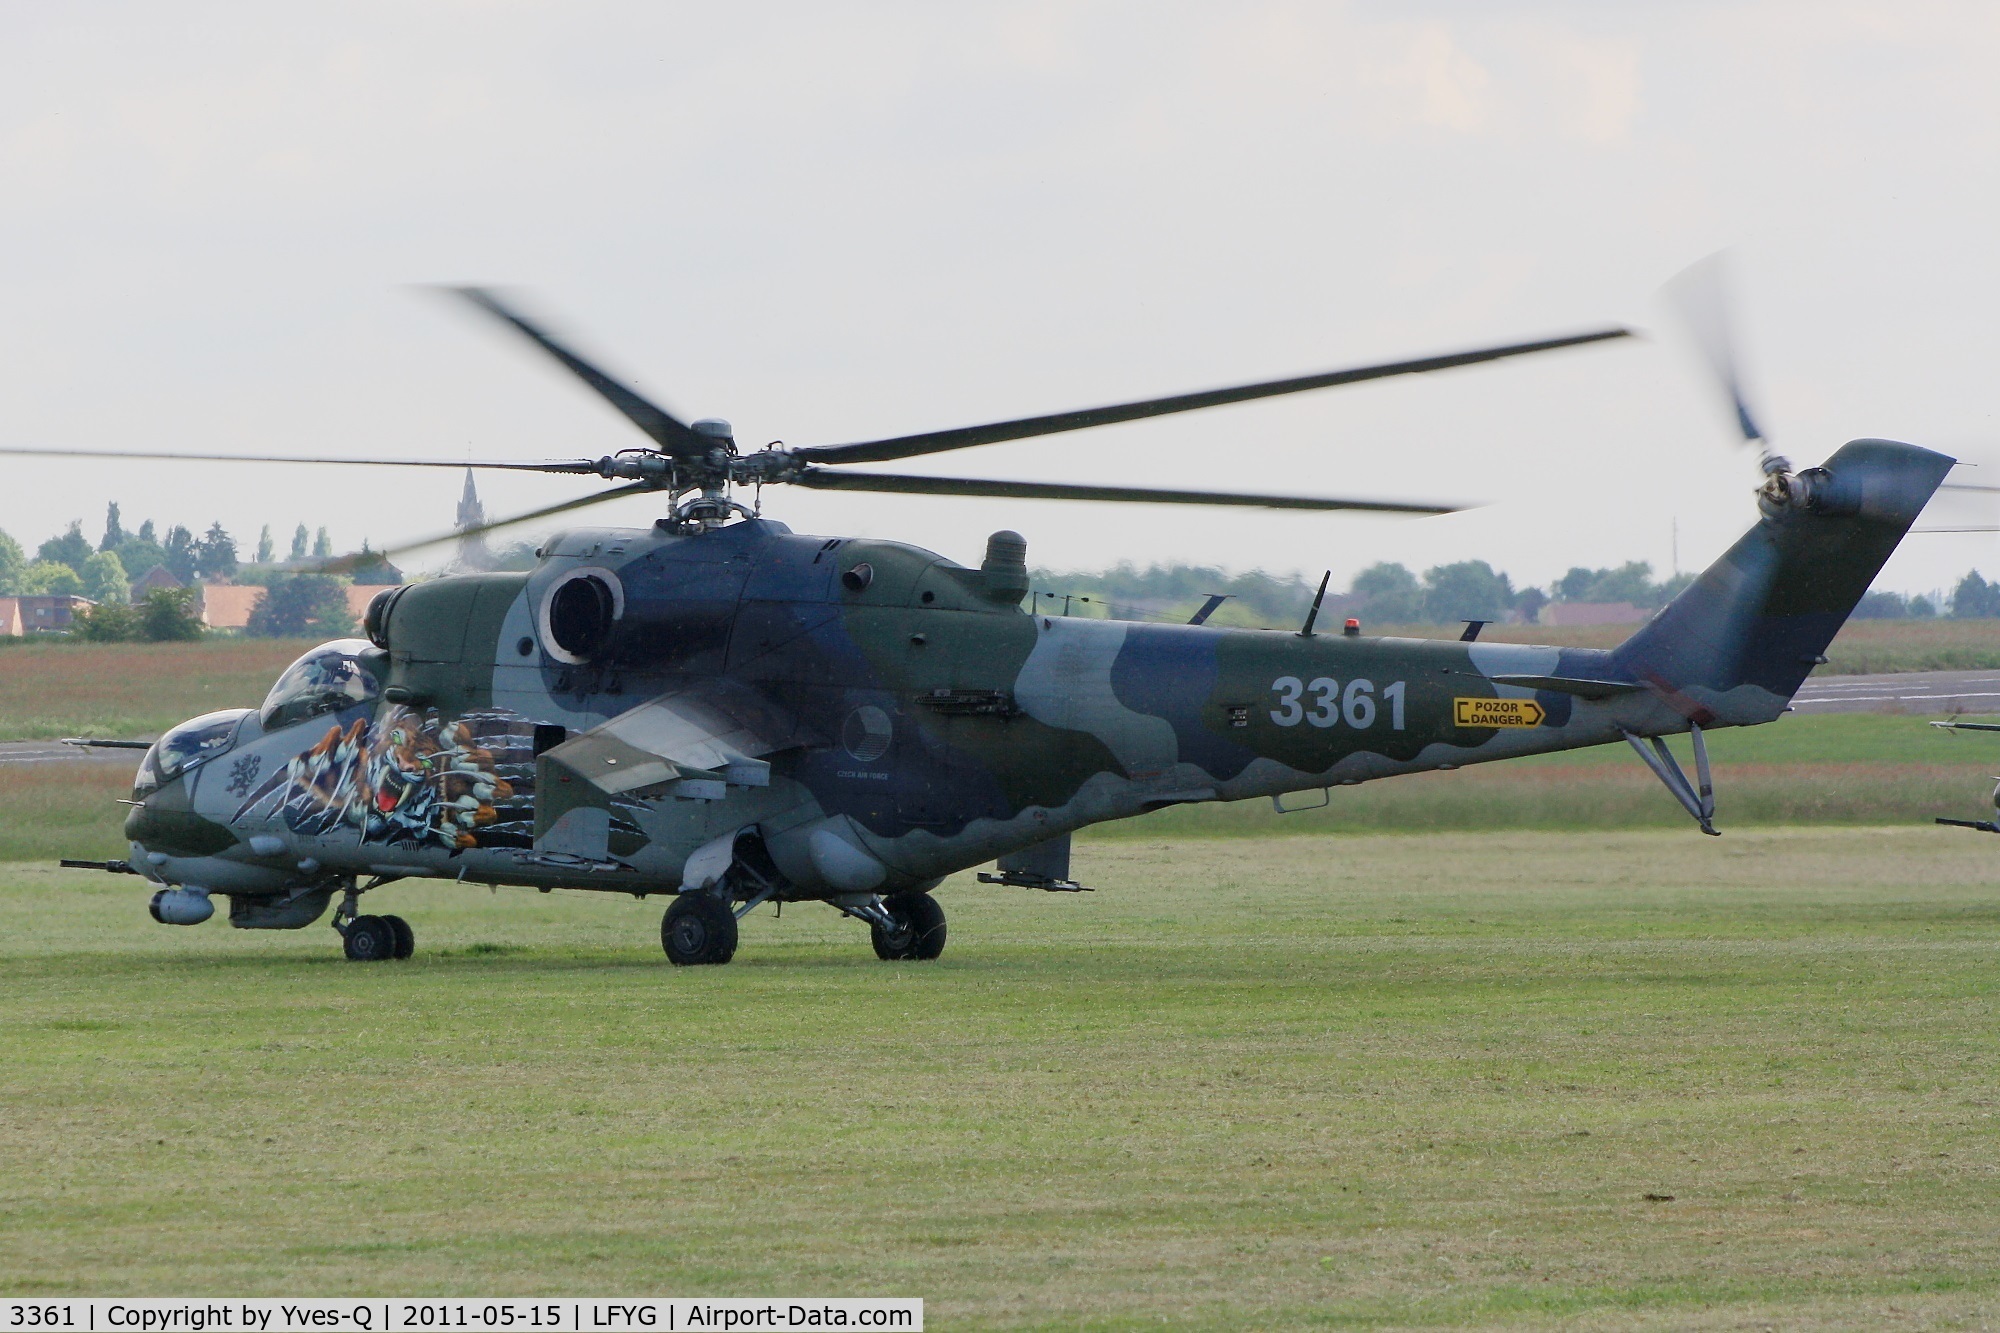 3361, 2005 Mil Mi-35 Hind E C/N 203361, Czech Republic Air Force Mil Mi-35 Hind E, Cambrai-Niergnies Airfield (LFYG) open day Tiger Meet 2011